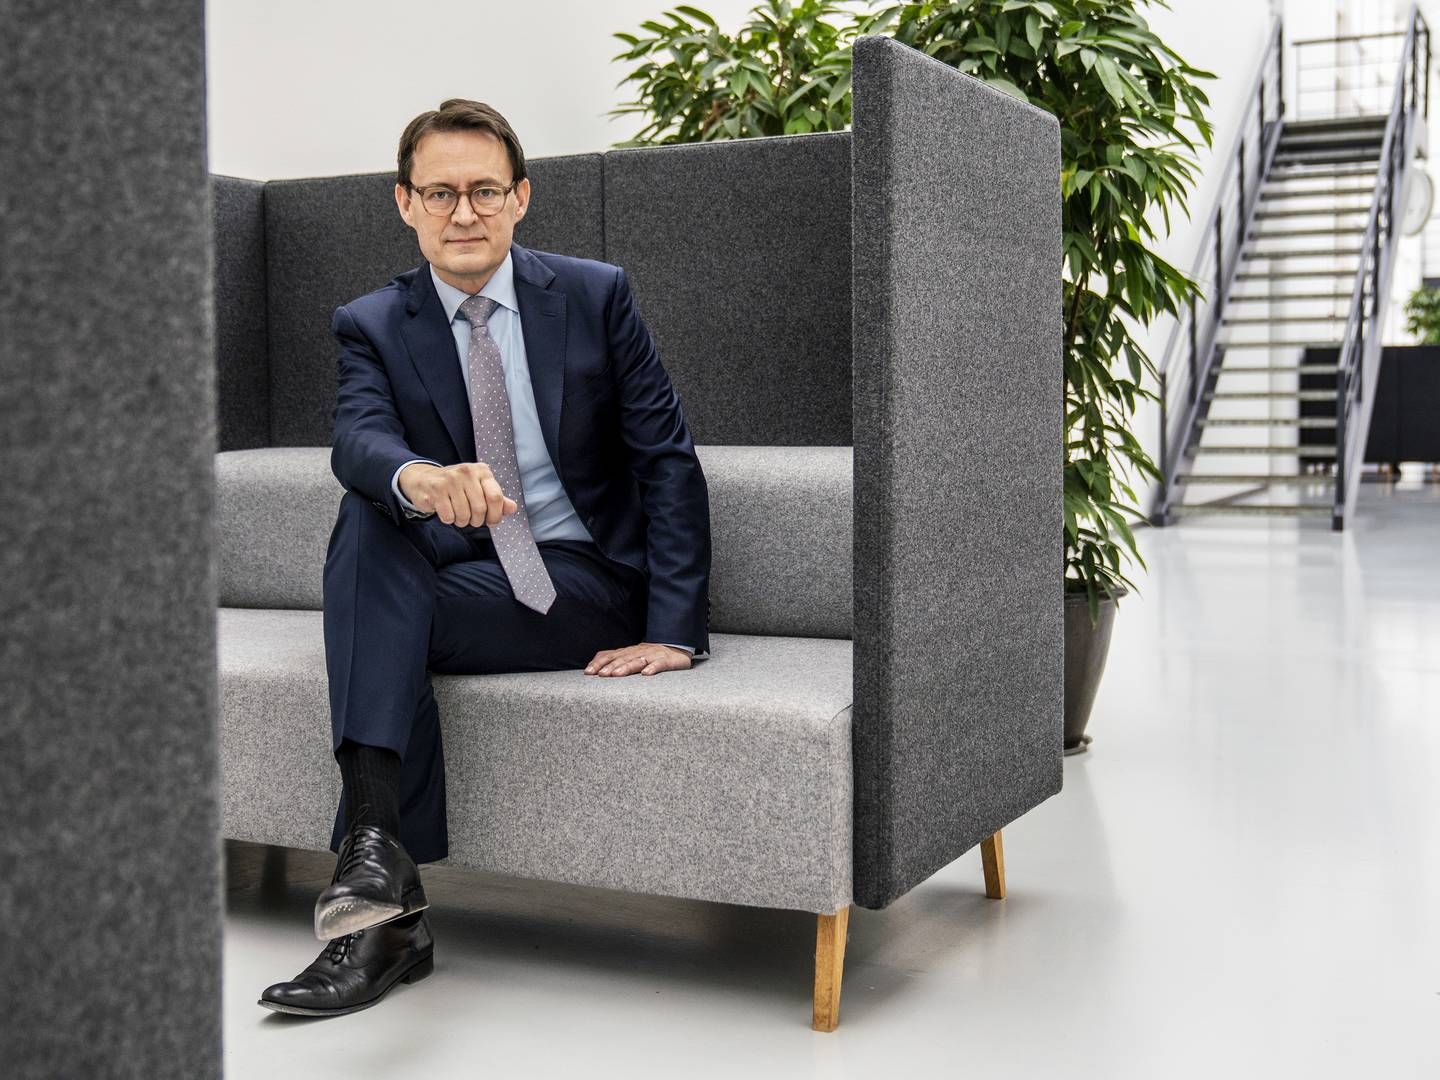 Kristian Villumsen, CEO of Coloplast | Photo: Stine Bidstrup/ERH